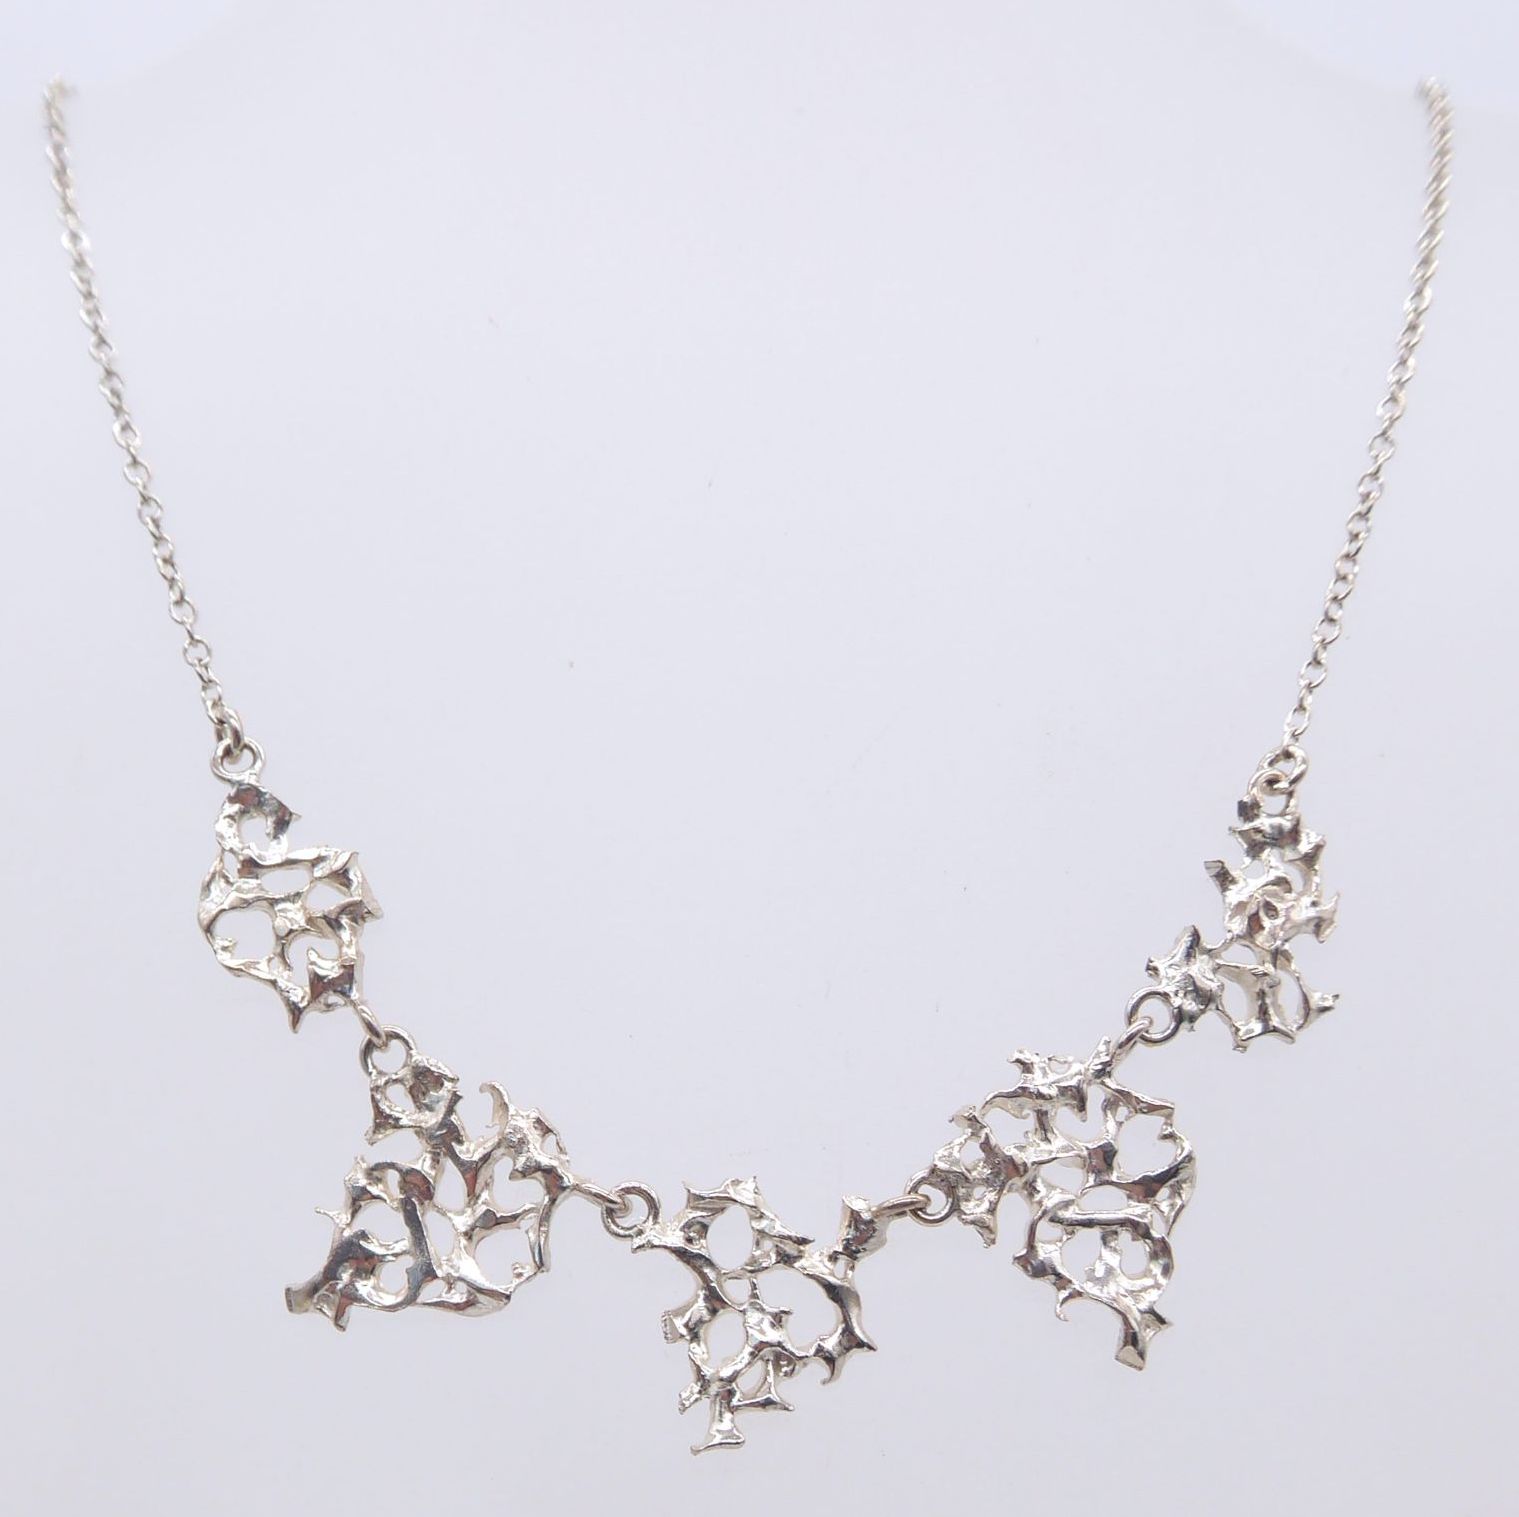 Silver web necklace